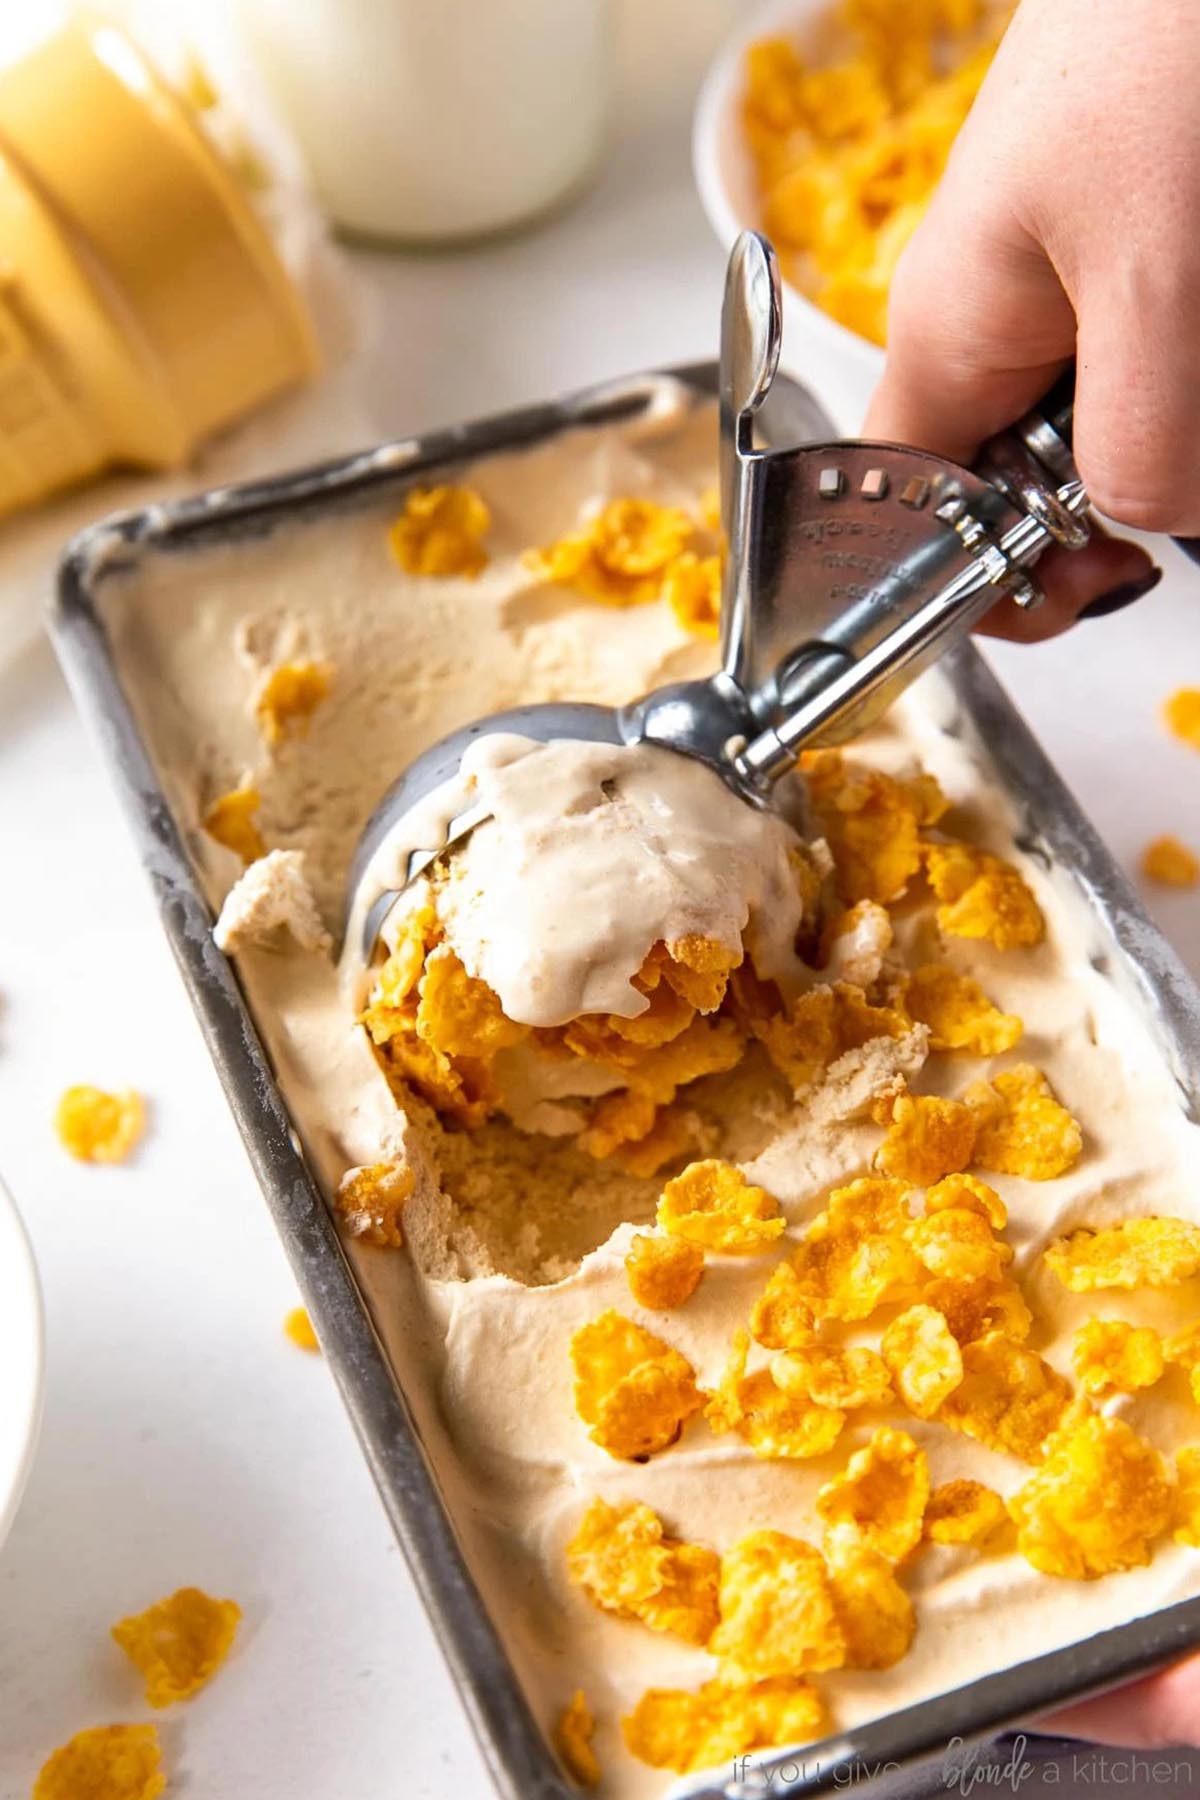 ice cream with corn flakes on top.